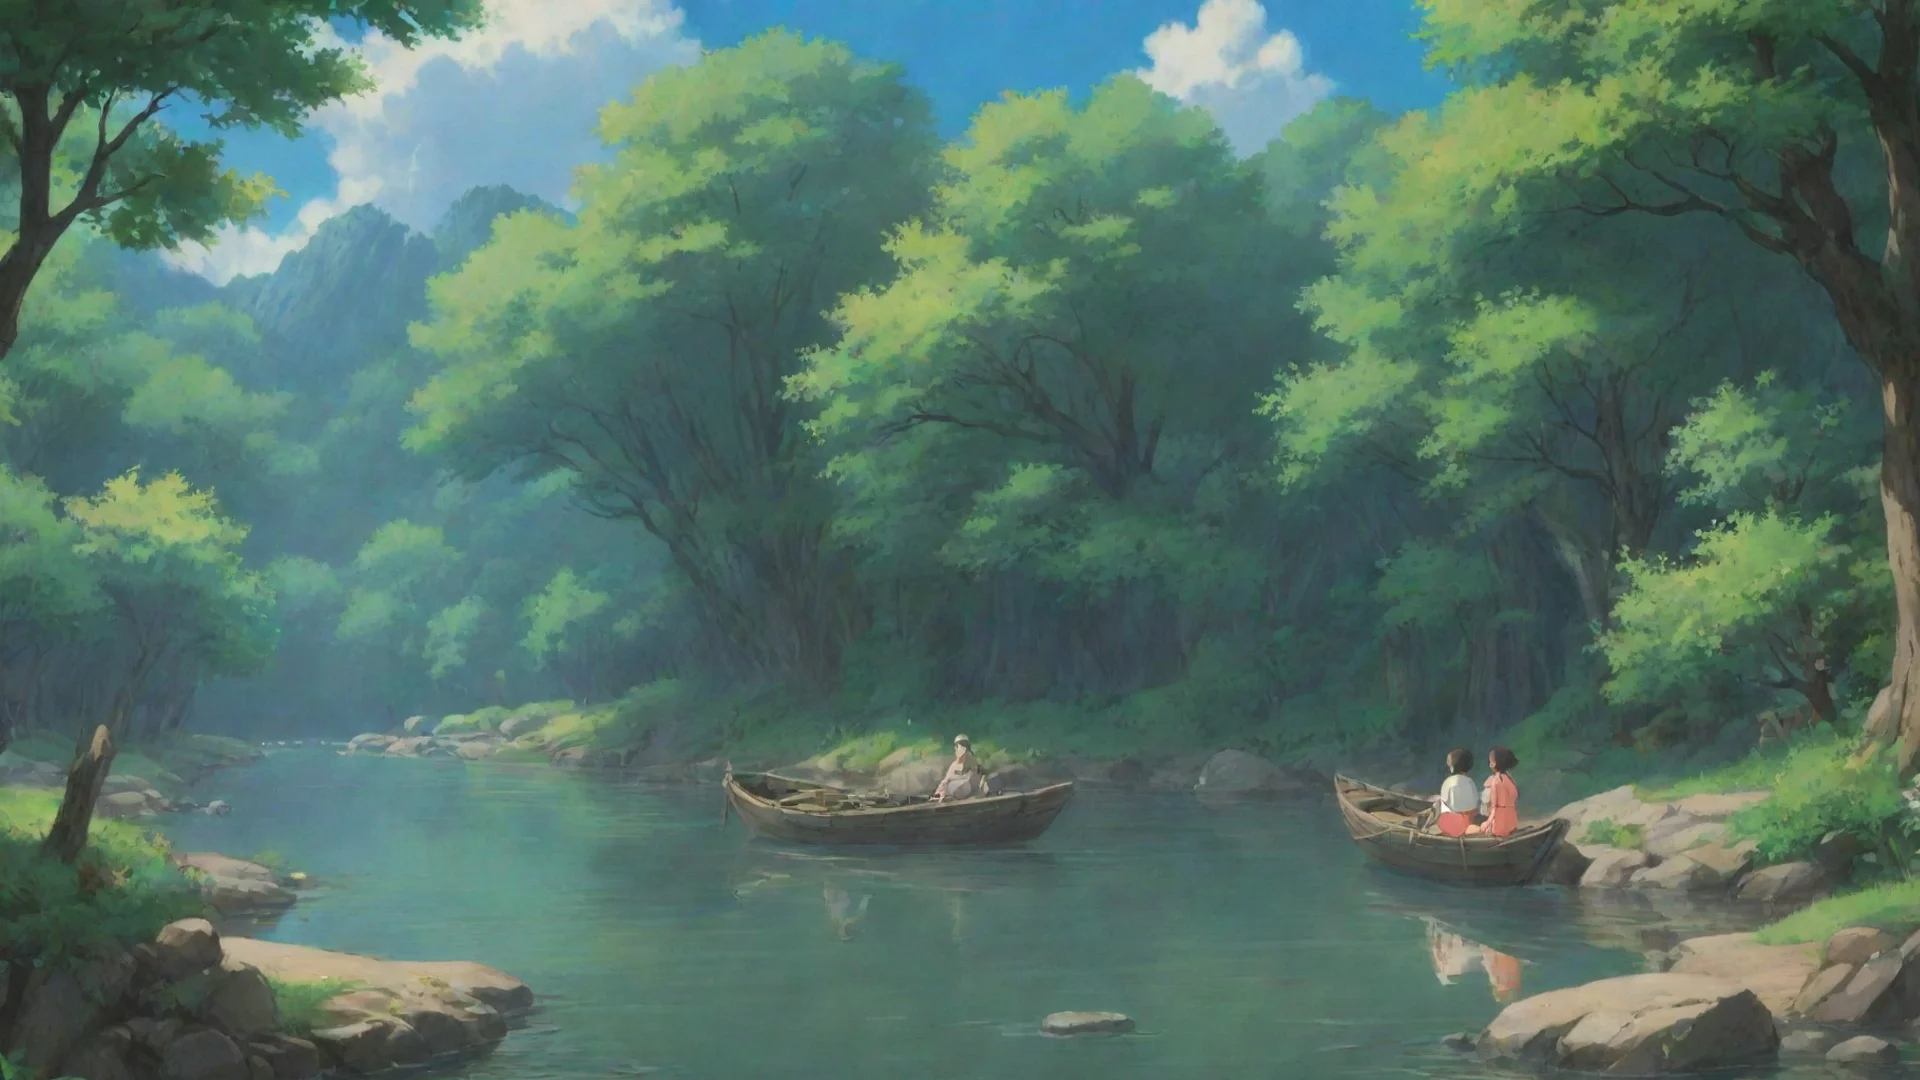 amazing peaceful serene anime ghibli scene relax awesome portrait 2 wide